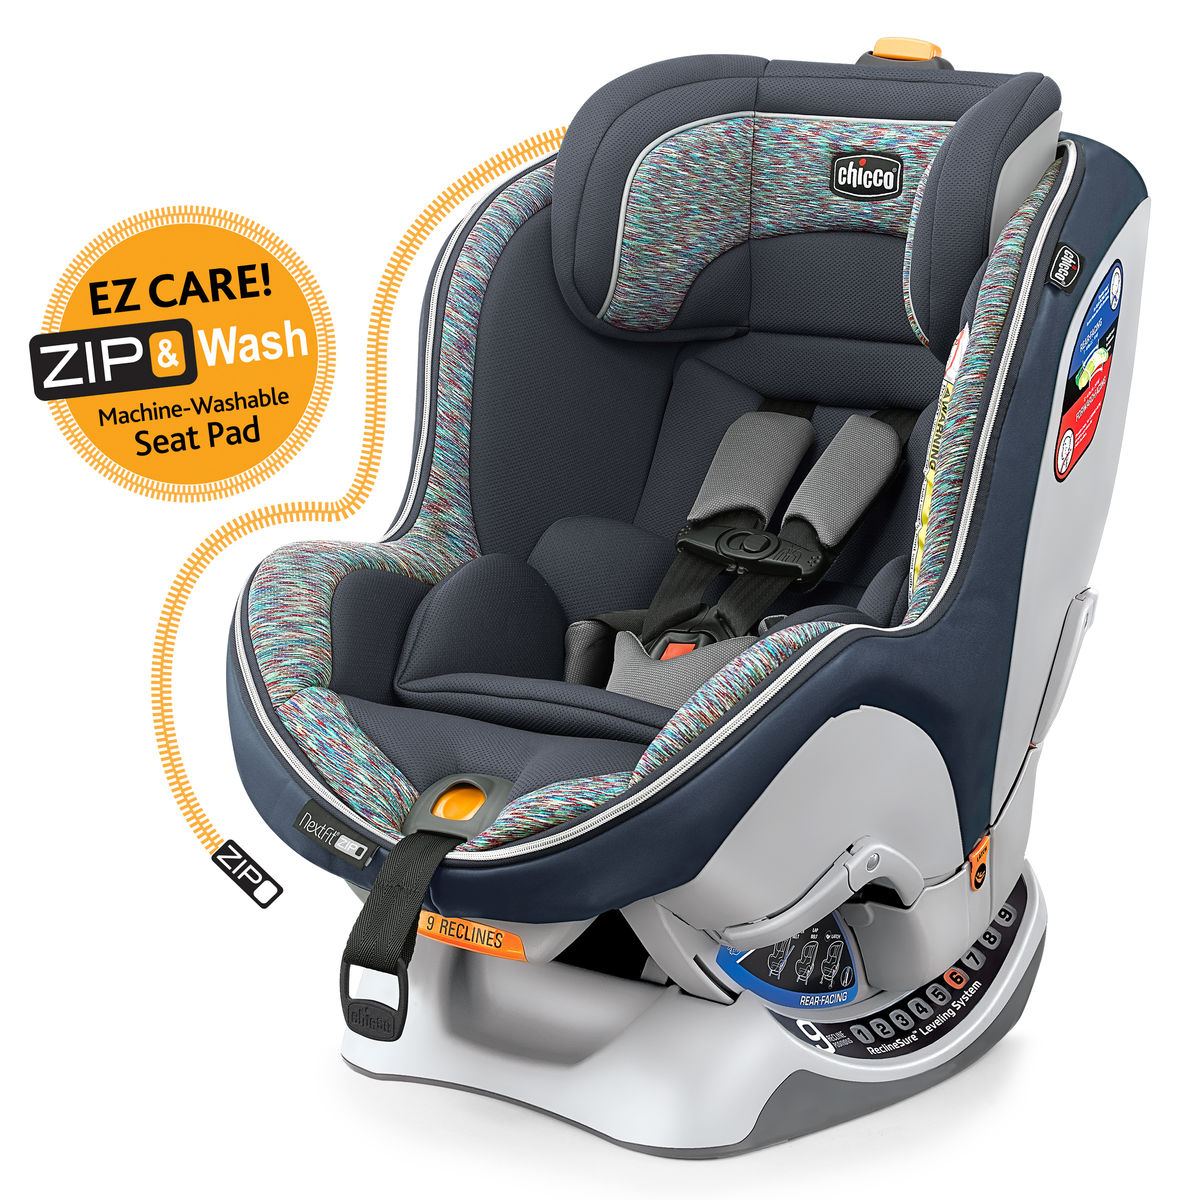 Chicco NextFit Zip Convertible Car Seat $199 (Reg $349) + Free Shipping